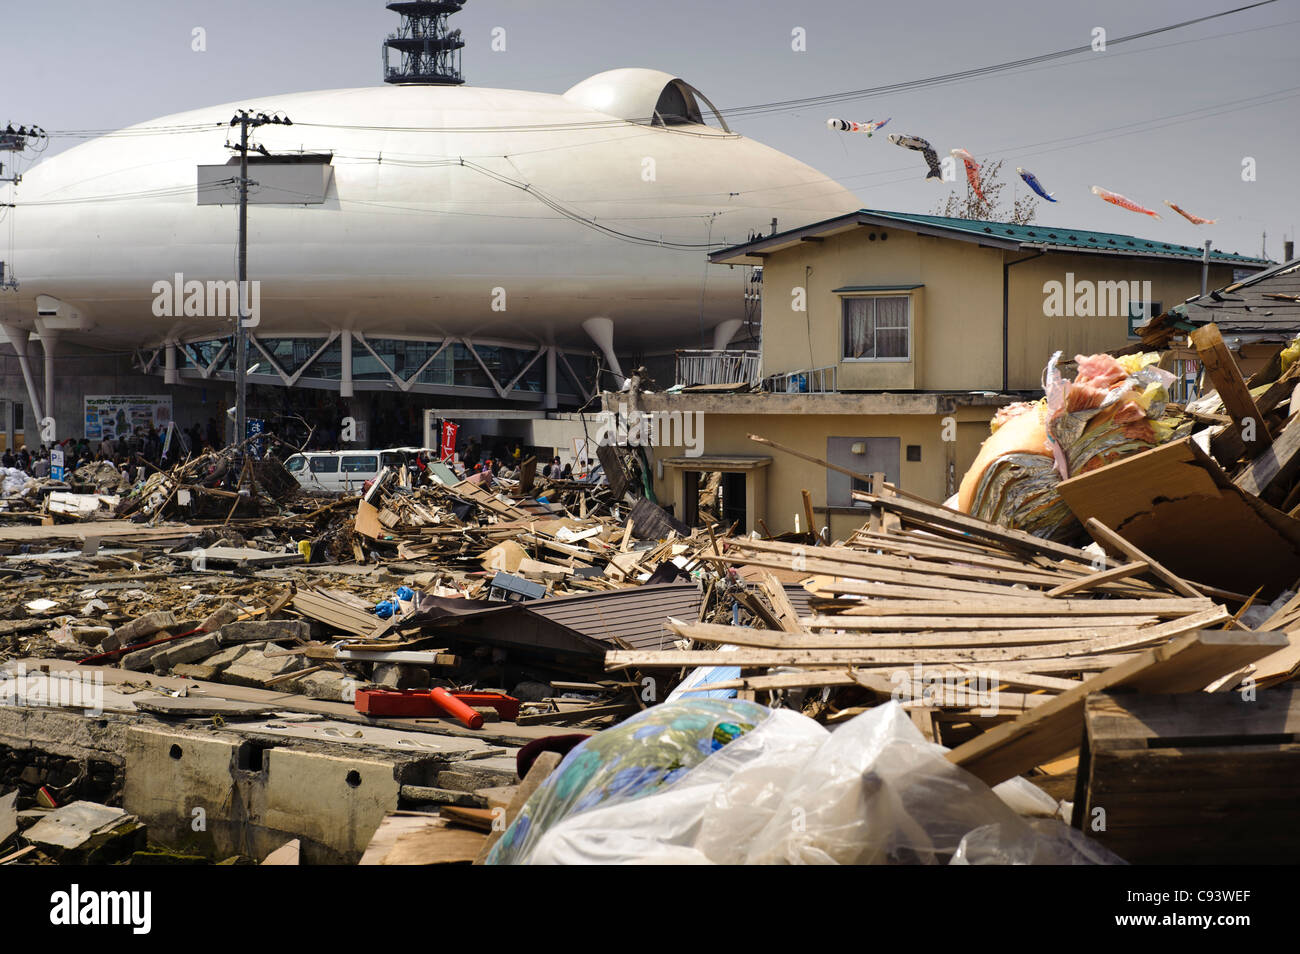 The Ishinomaki Mangattan museum amidst debris from the March 11 tsunami, Miyagi Prefecture, Japan Stock Photo